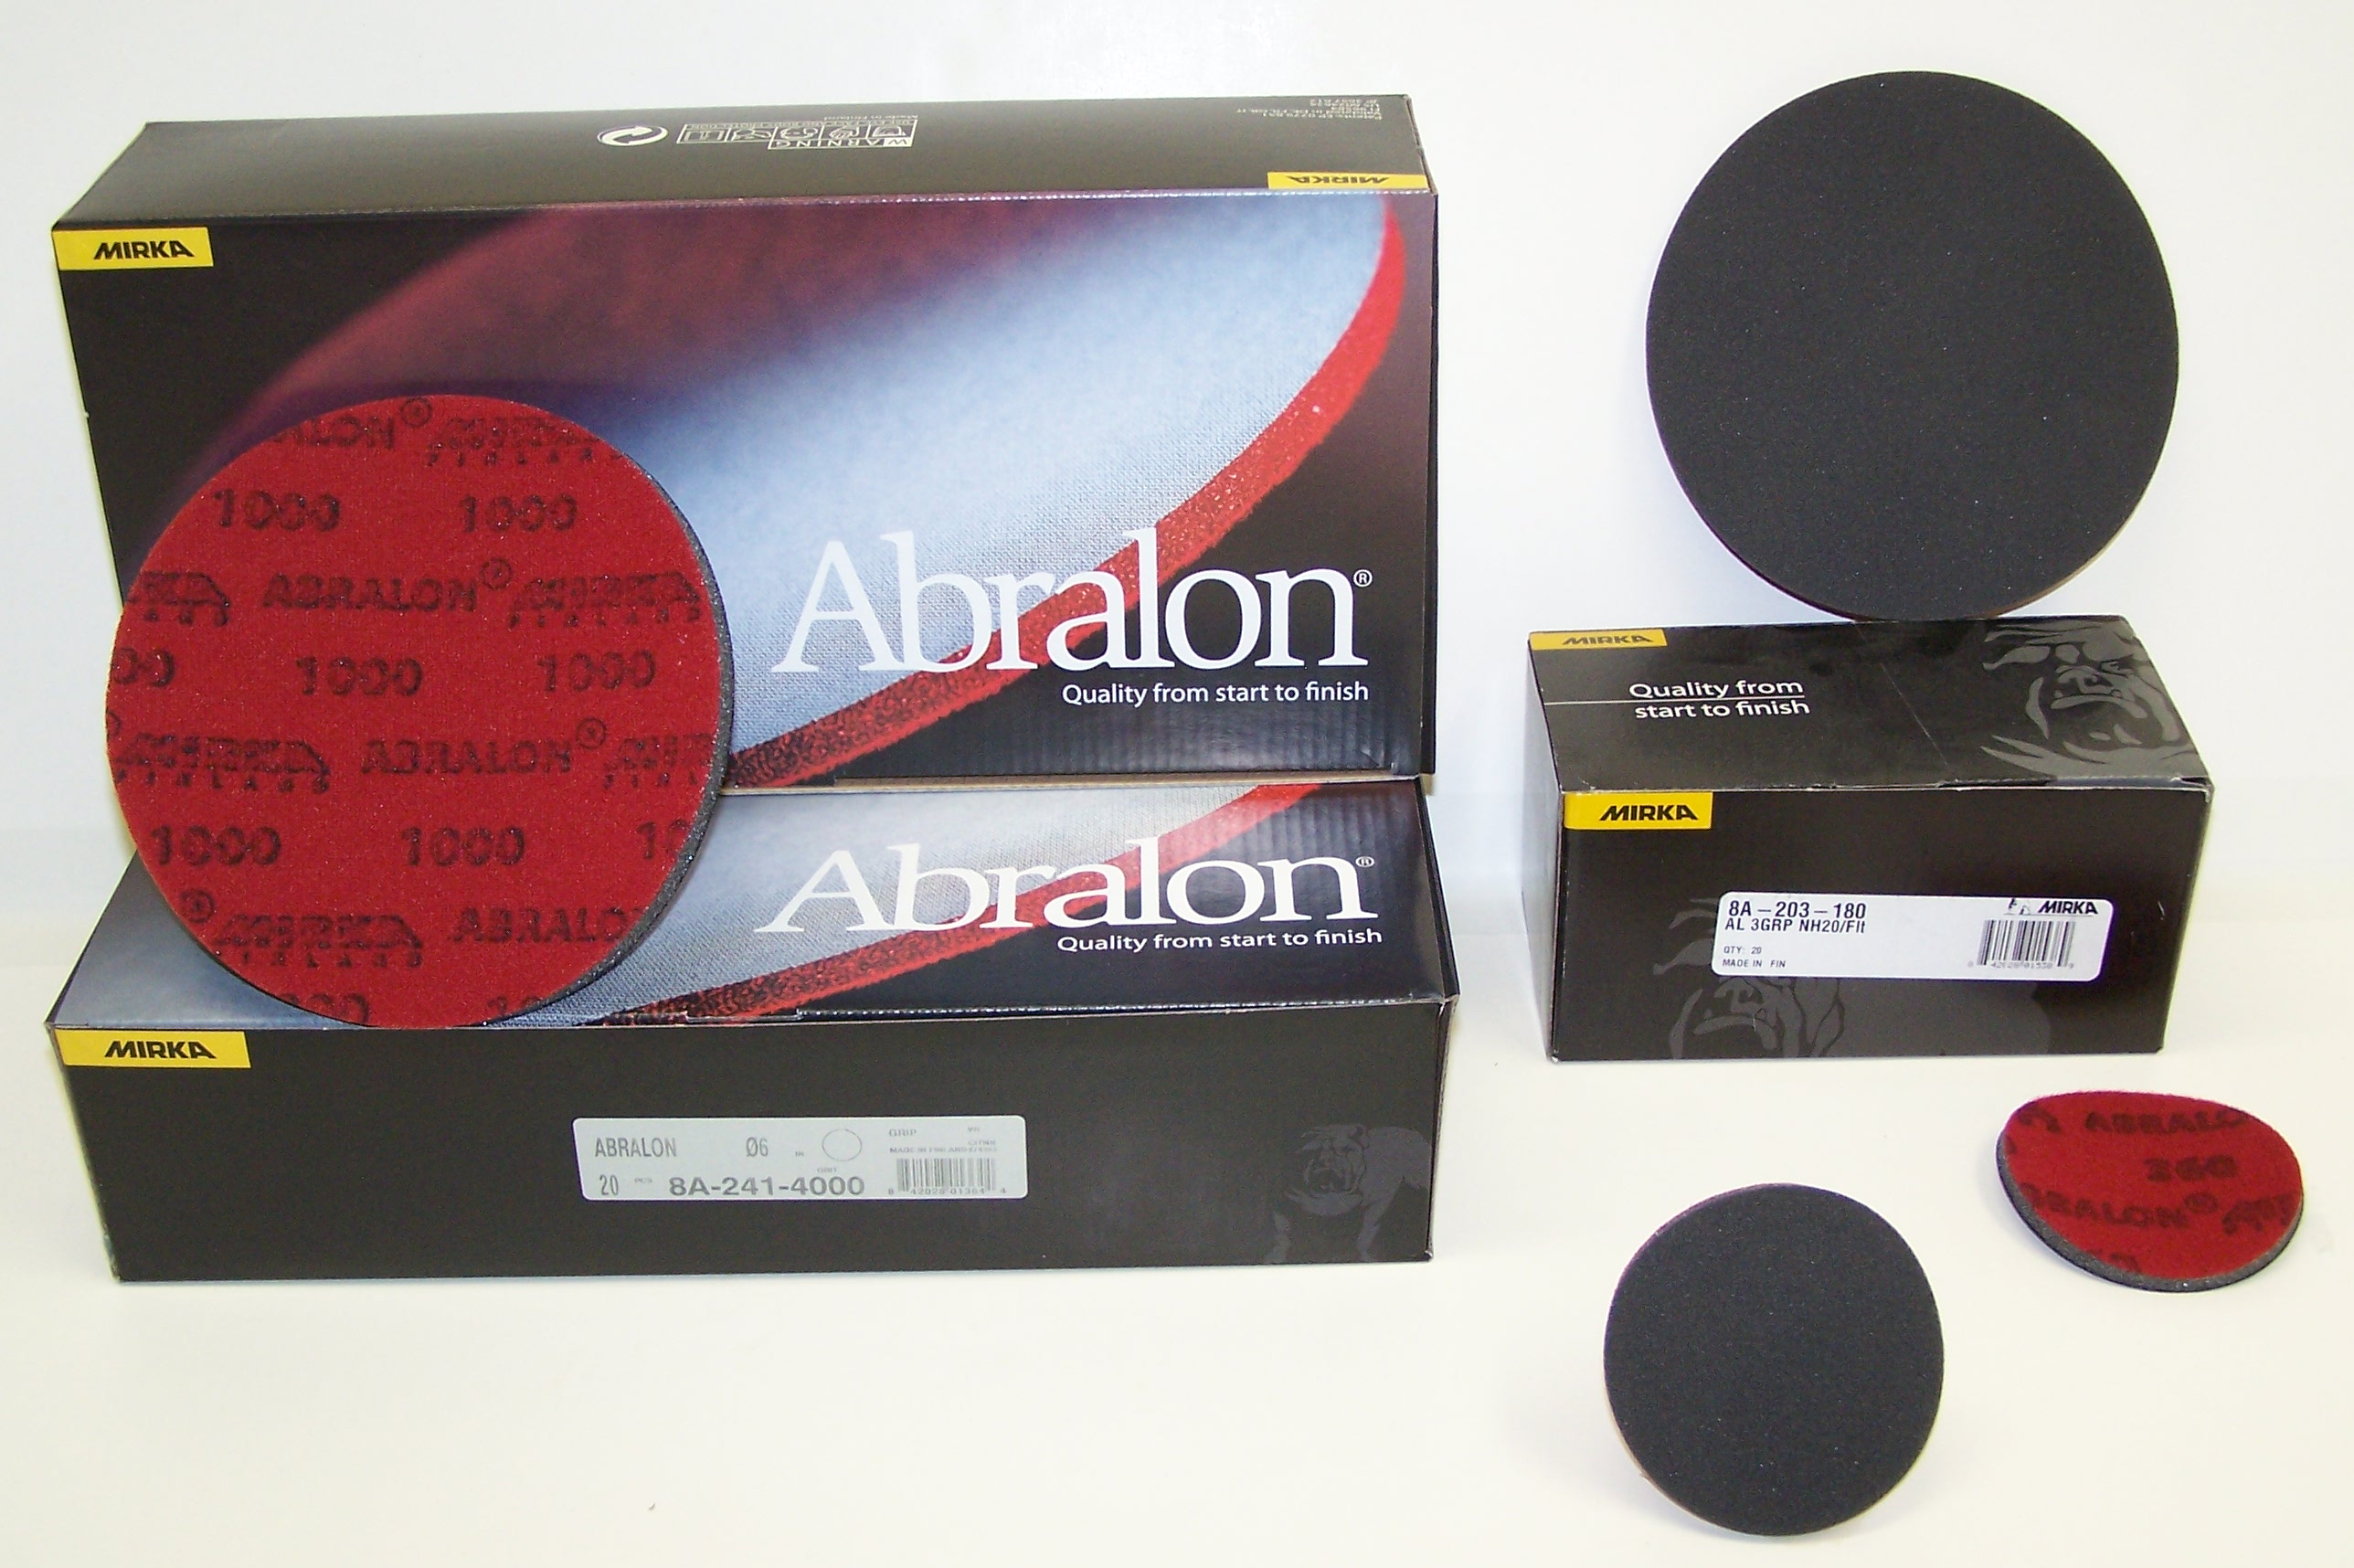 10-Pack Mirka Abralon 8A-241-360B 360 Grit Silicon Carbide Sanding Polish Pads 